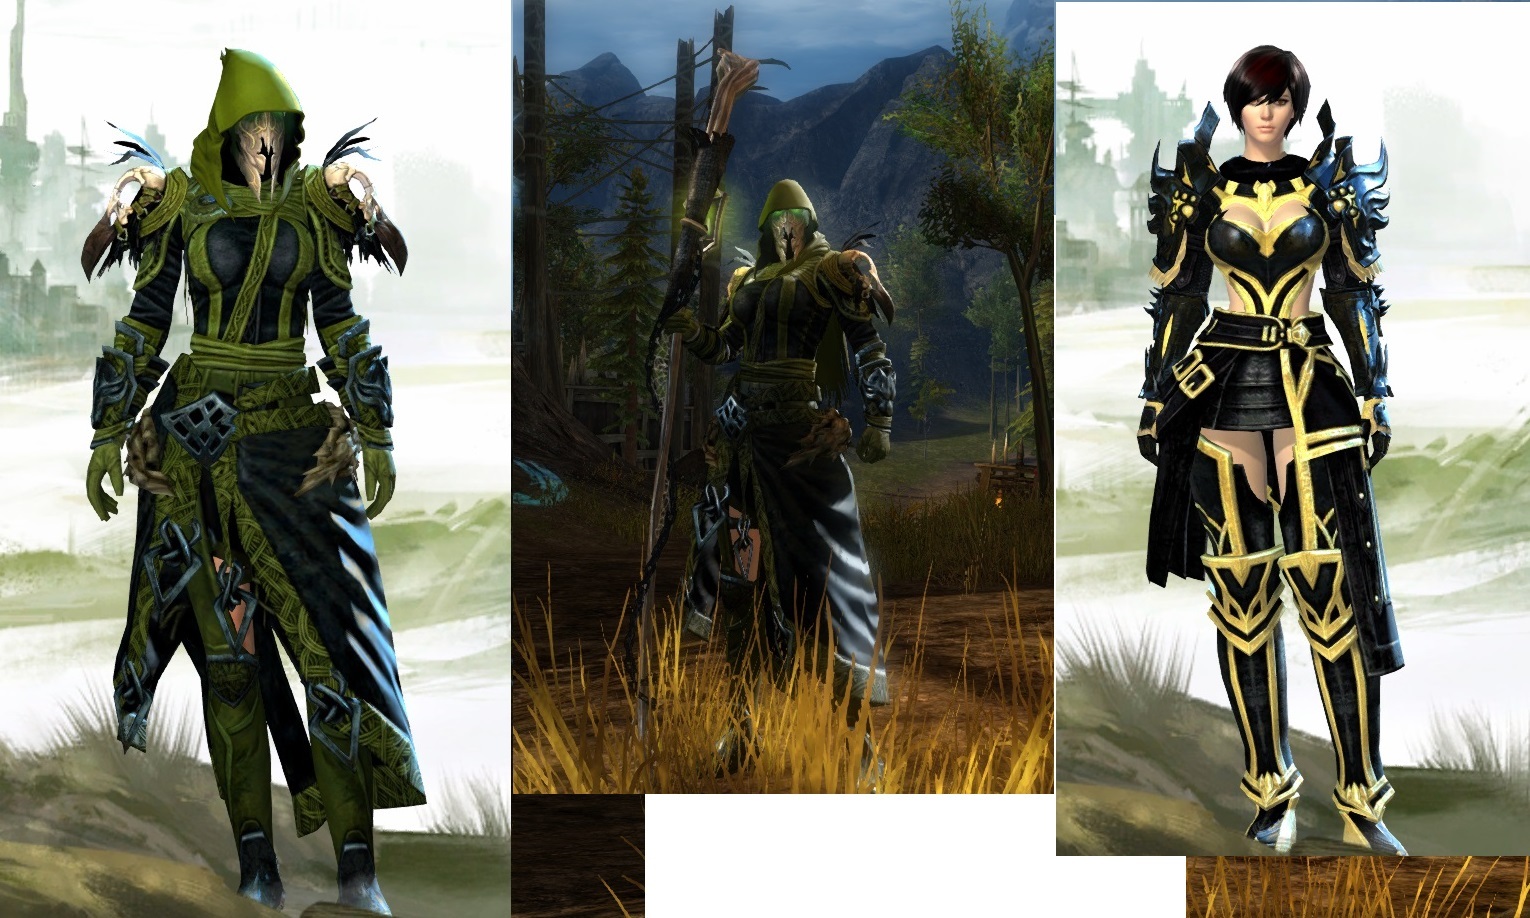 Gw2 armor skins